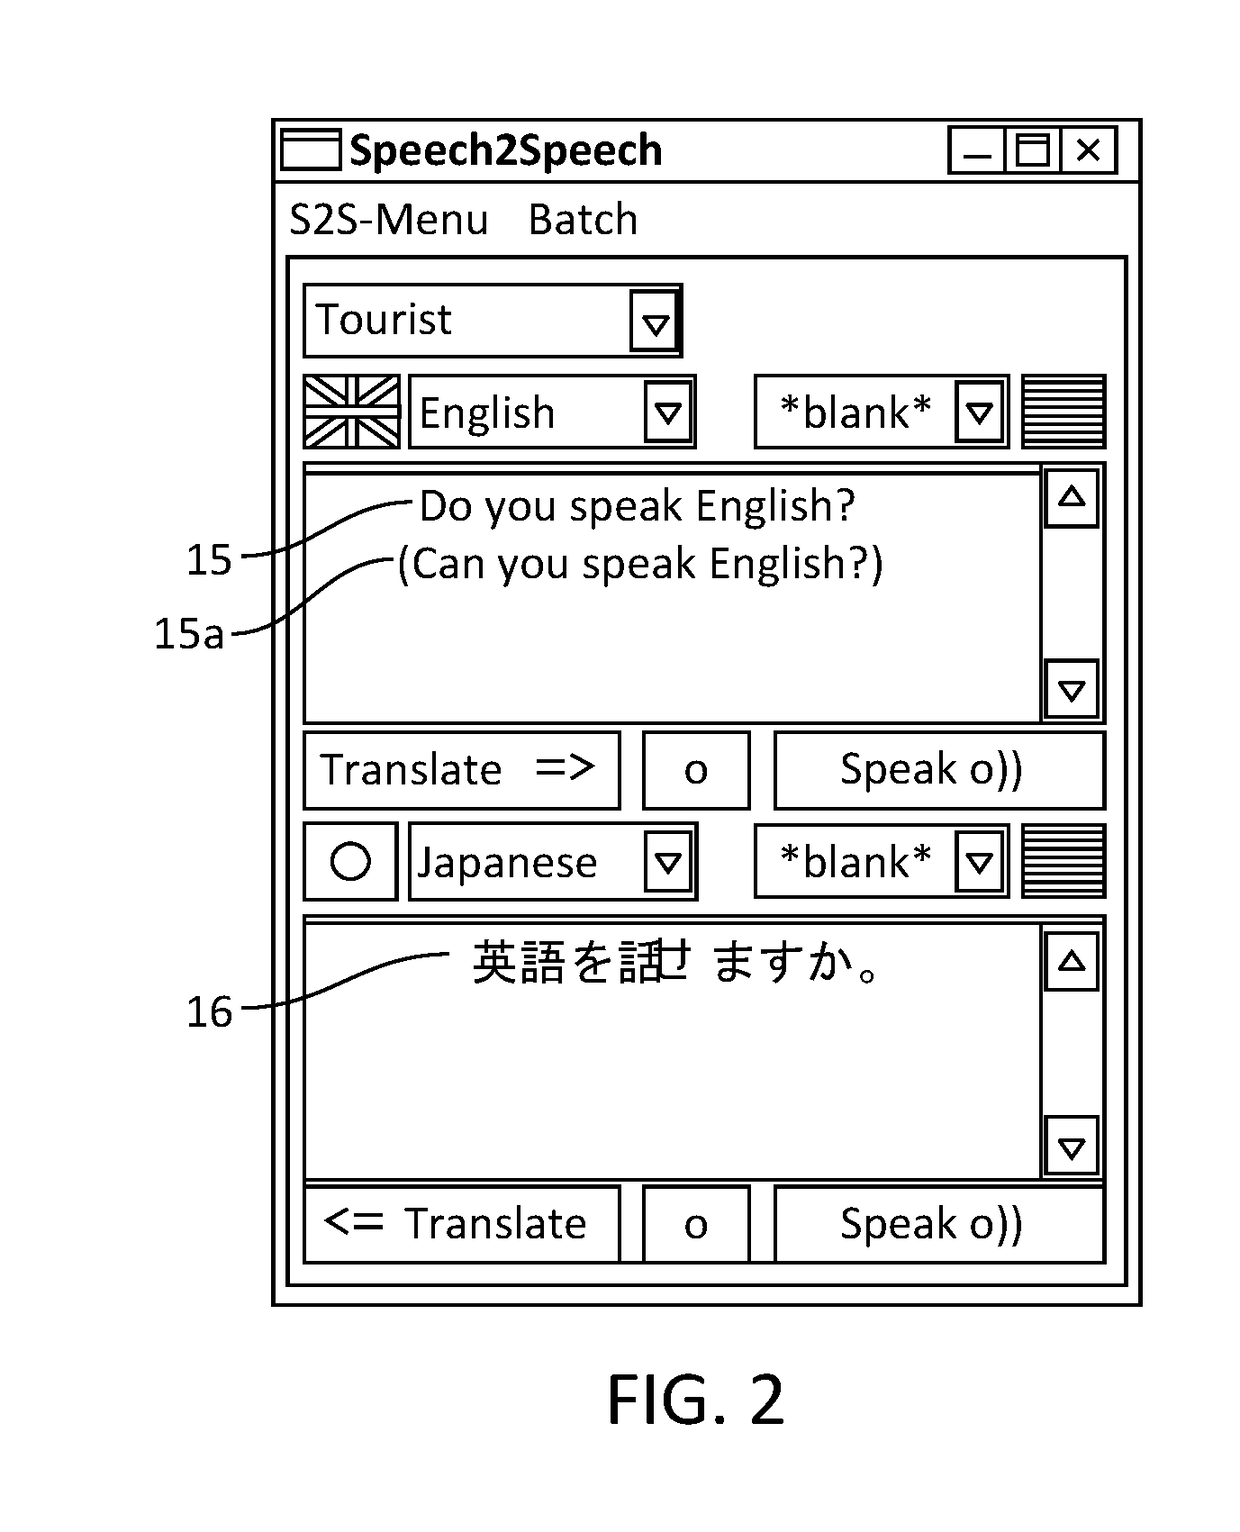 Lexicon development via shared translation database